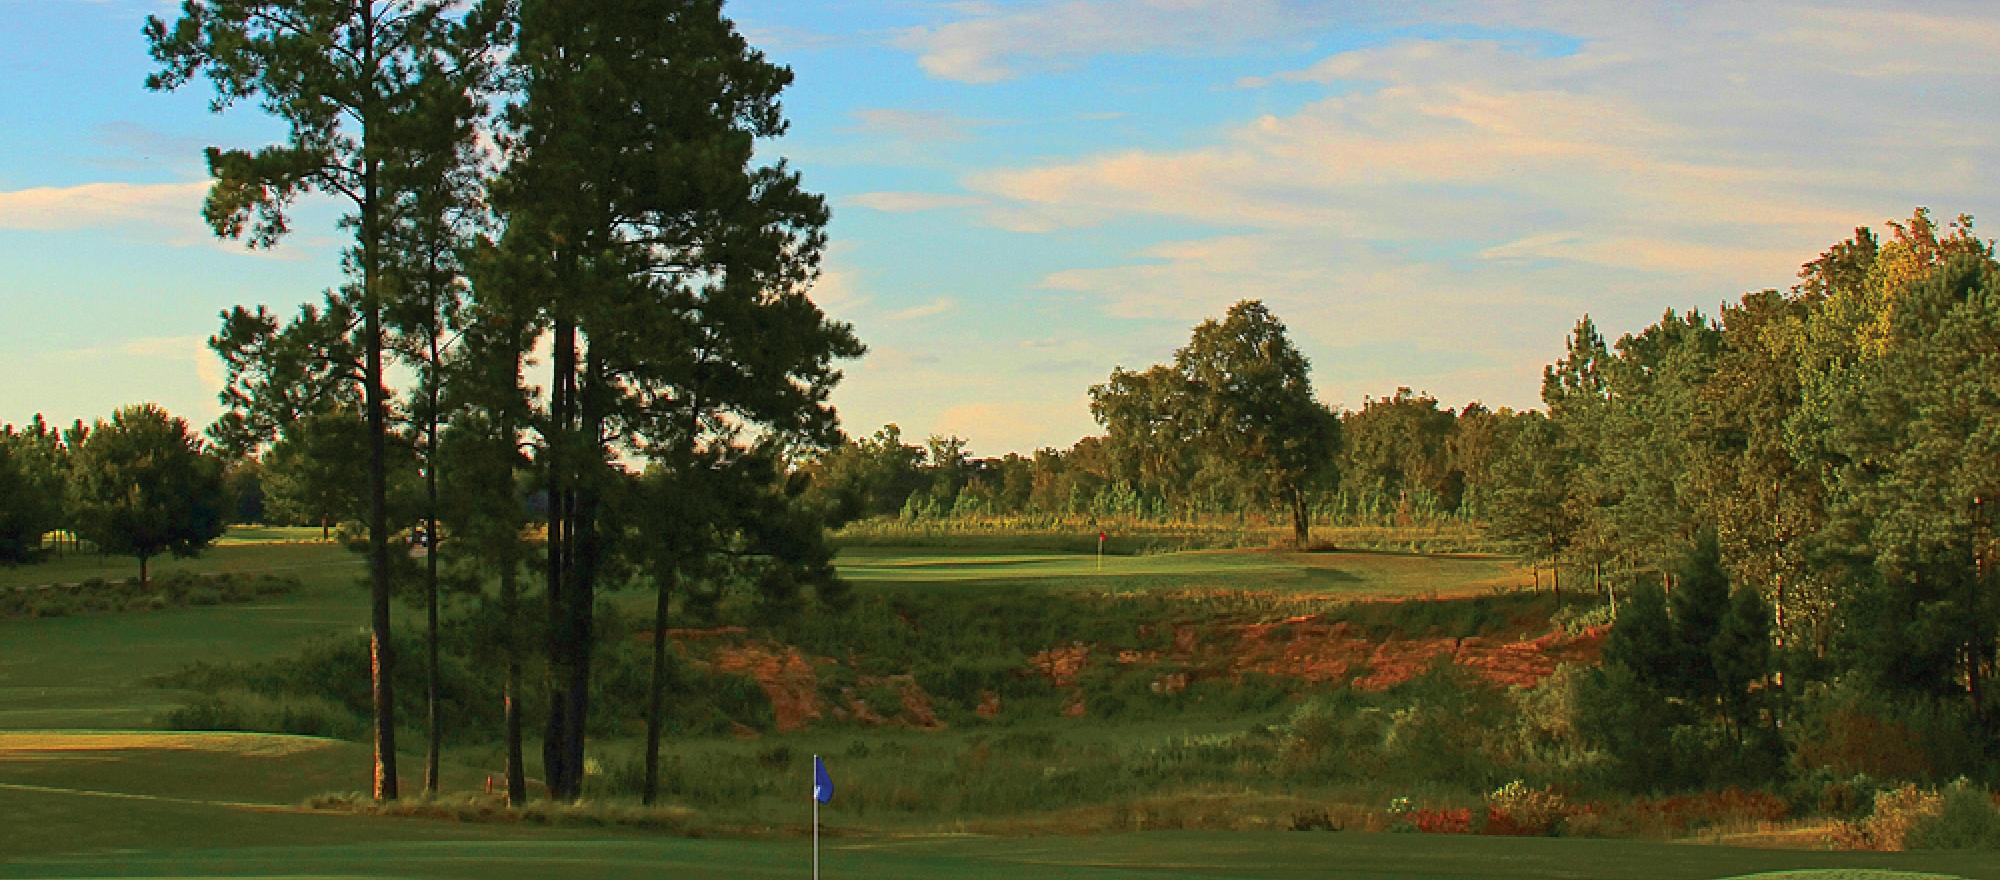 Kinderlou Forest Golf Club, Valdosta, Georgia.